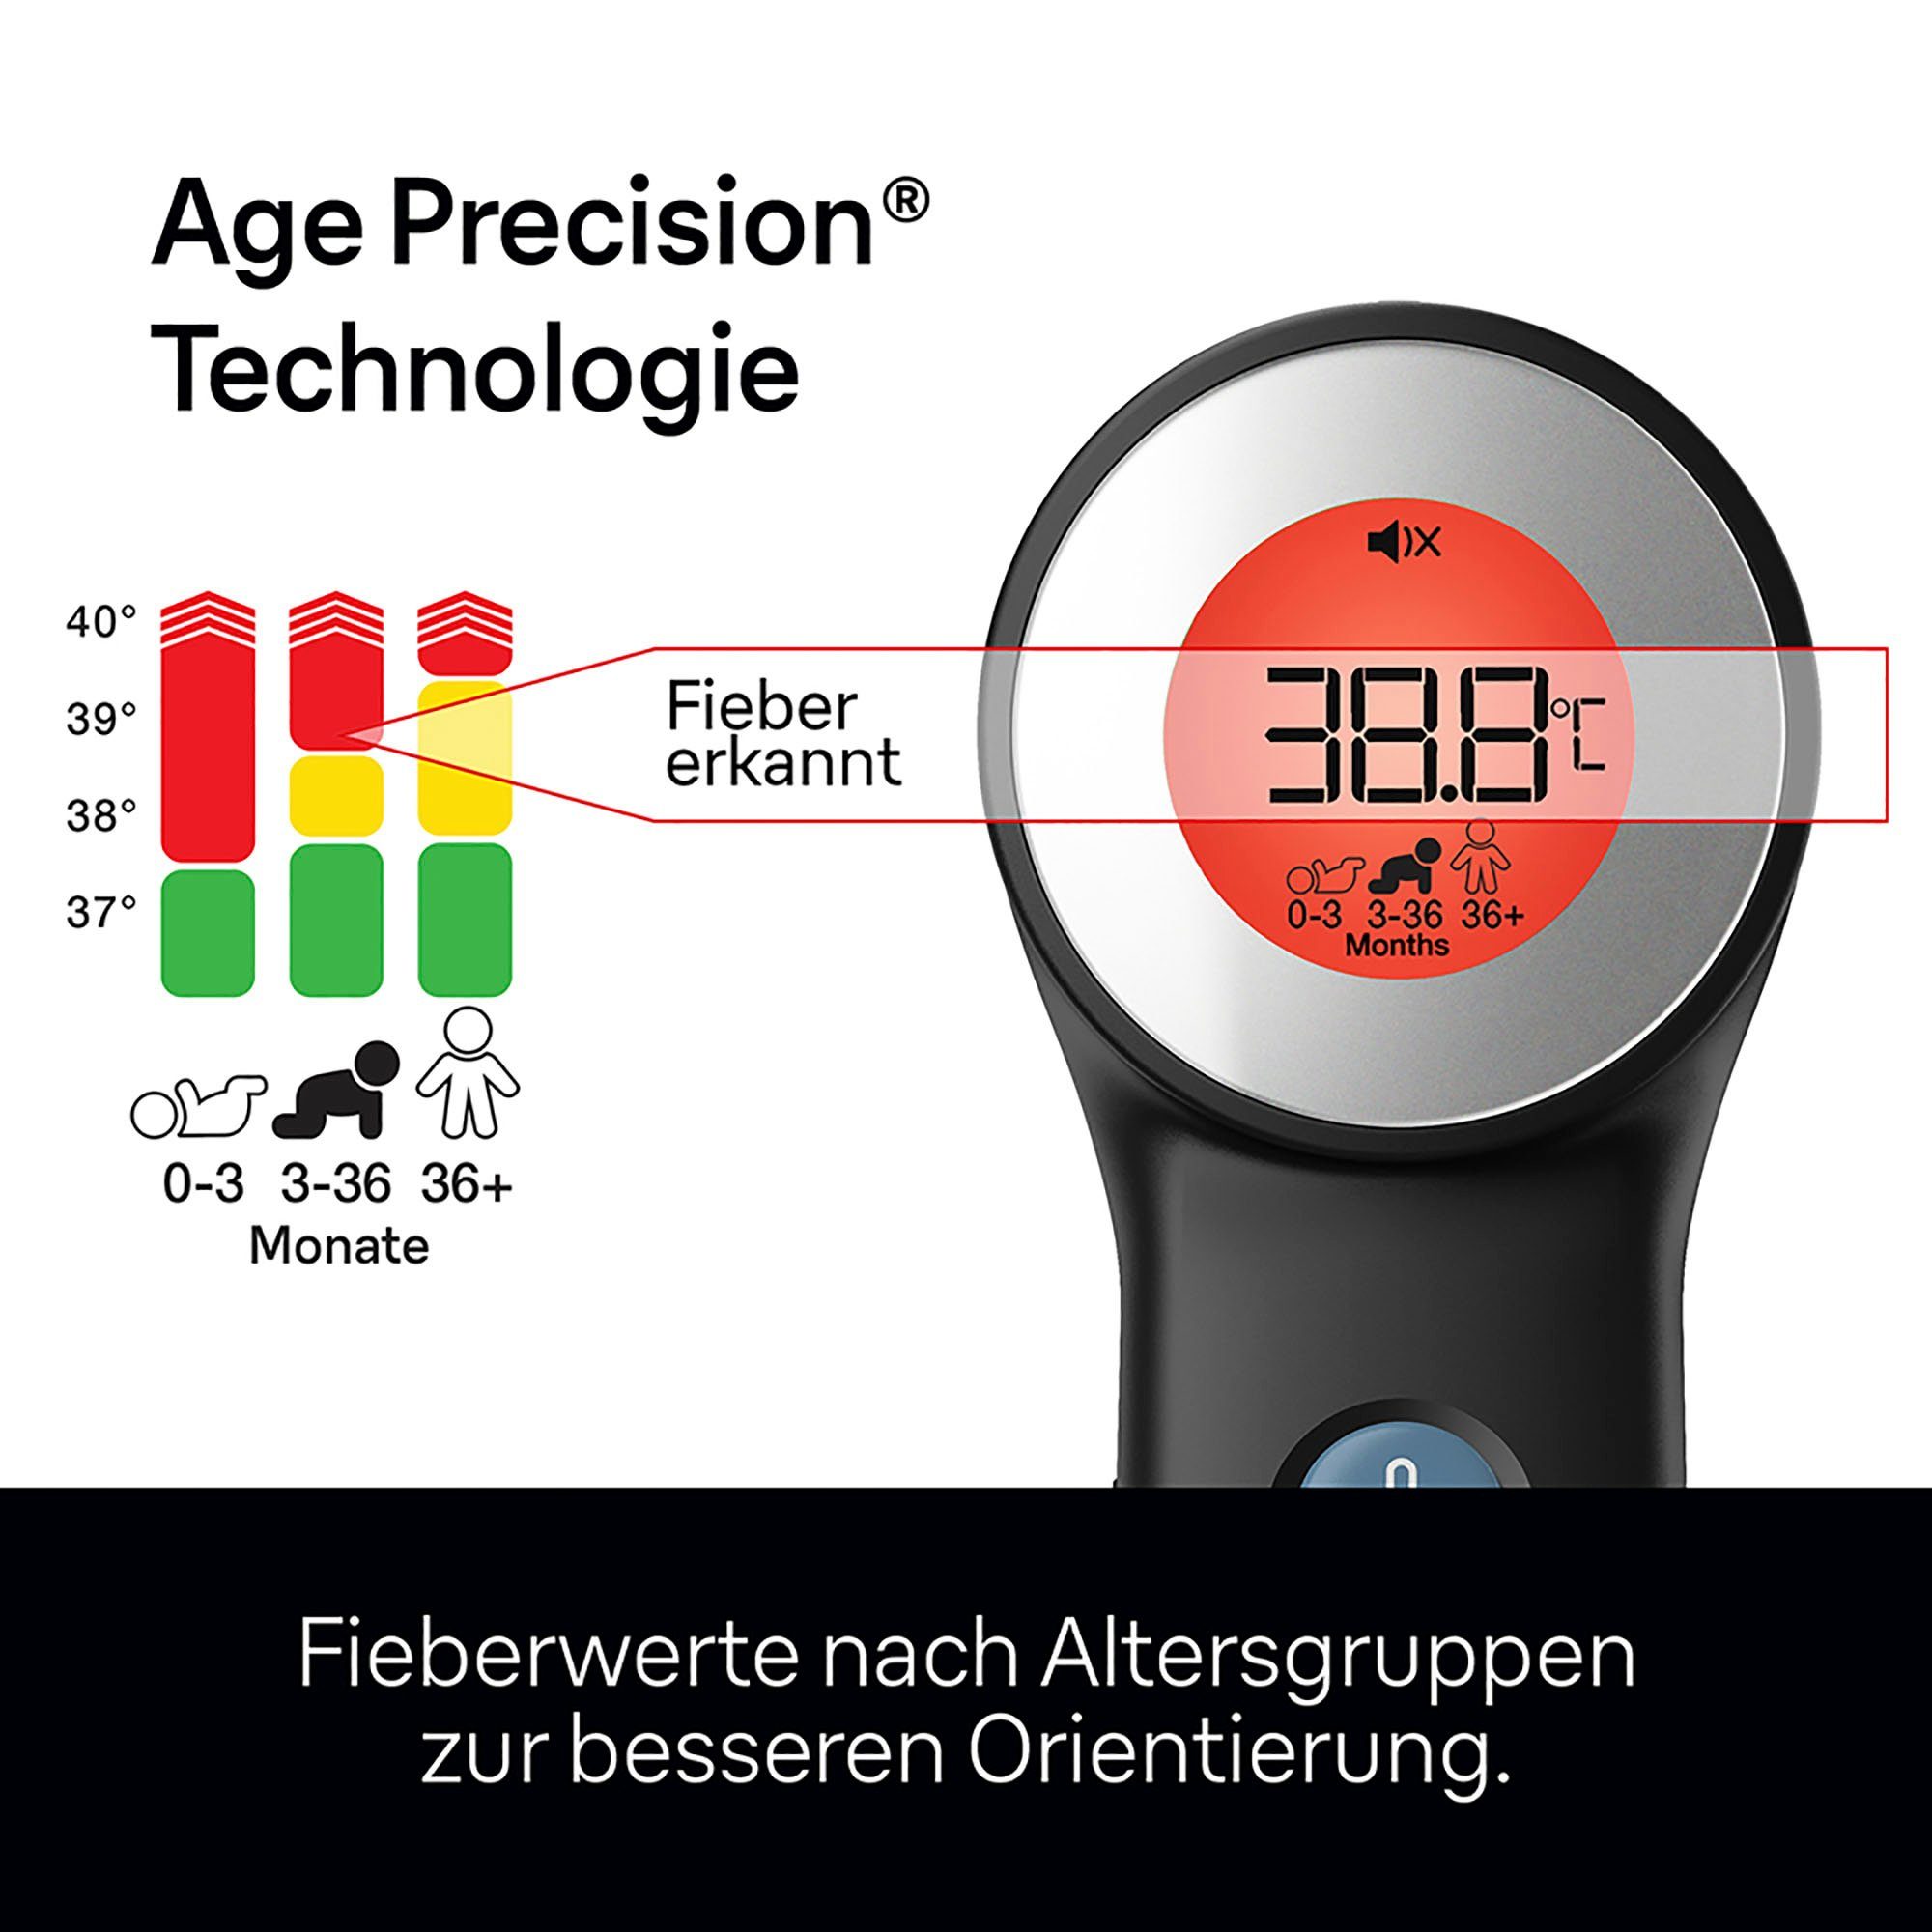 Braun Fieberthermometer Precision® SensianTM 7 Age Stirnthermometer Technology mit berührungsloses BNT400B